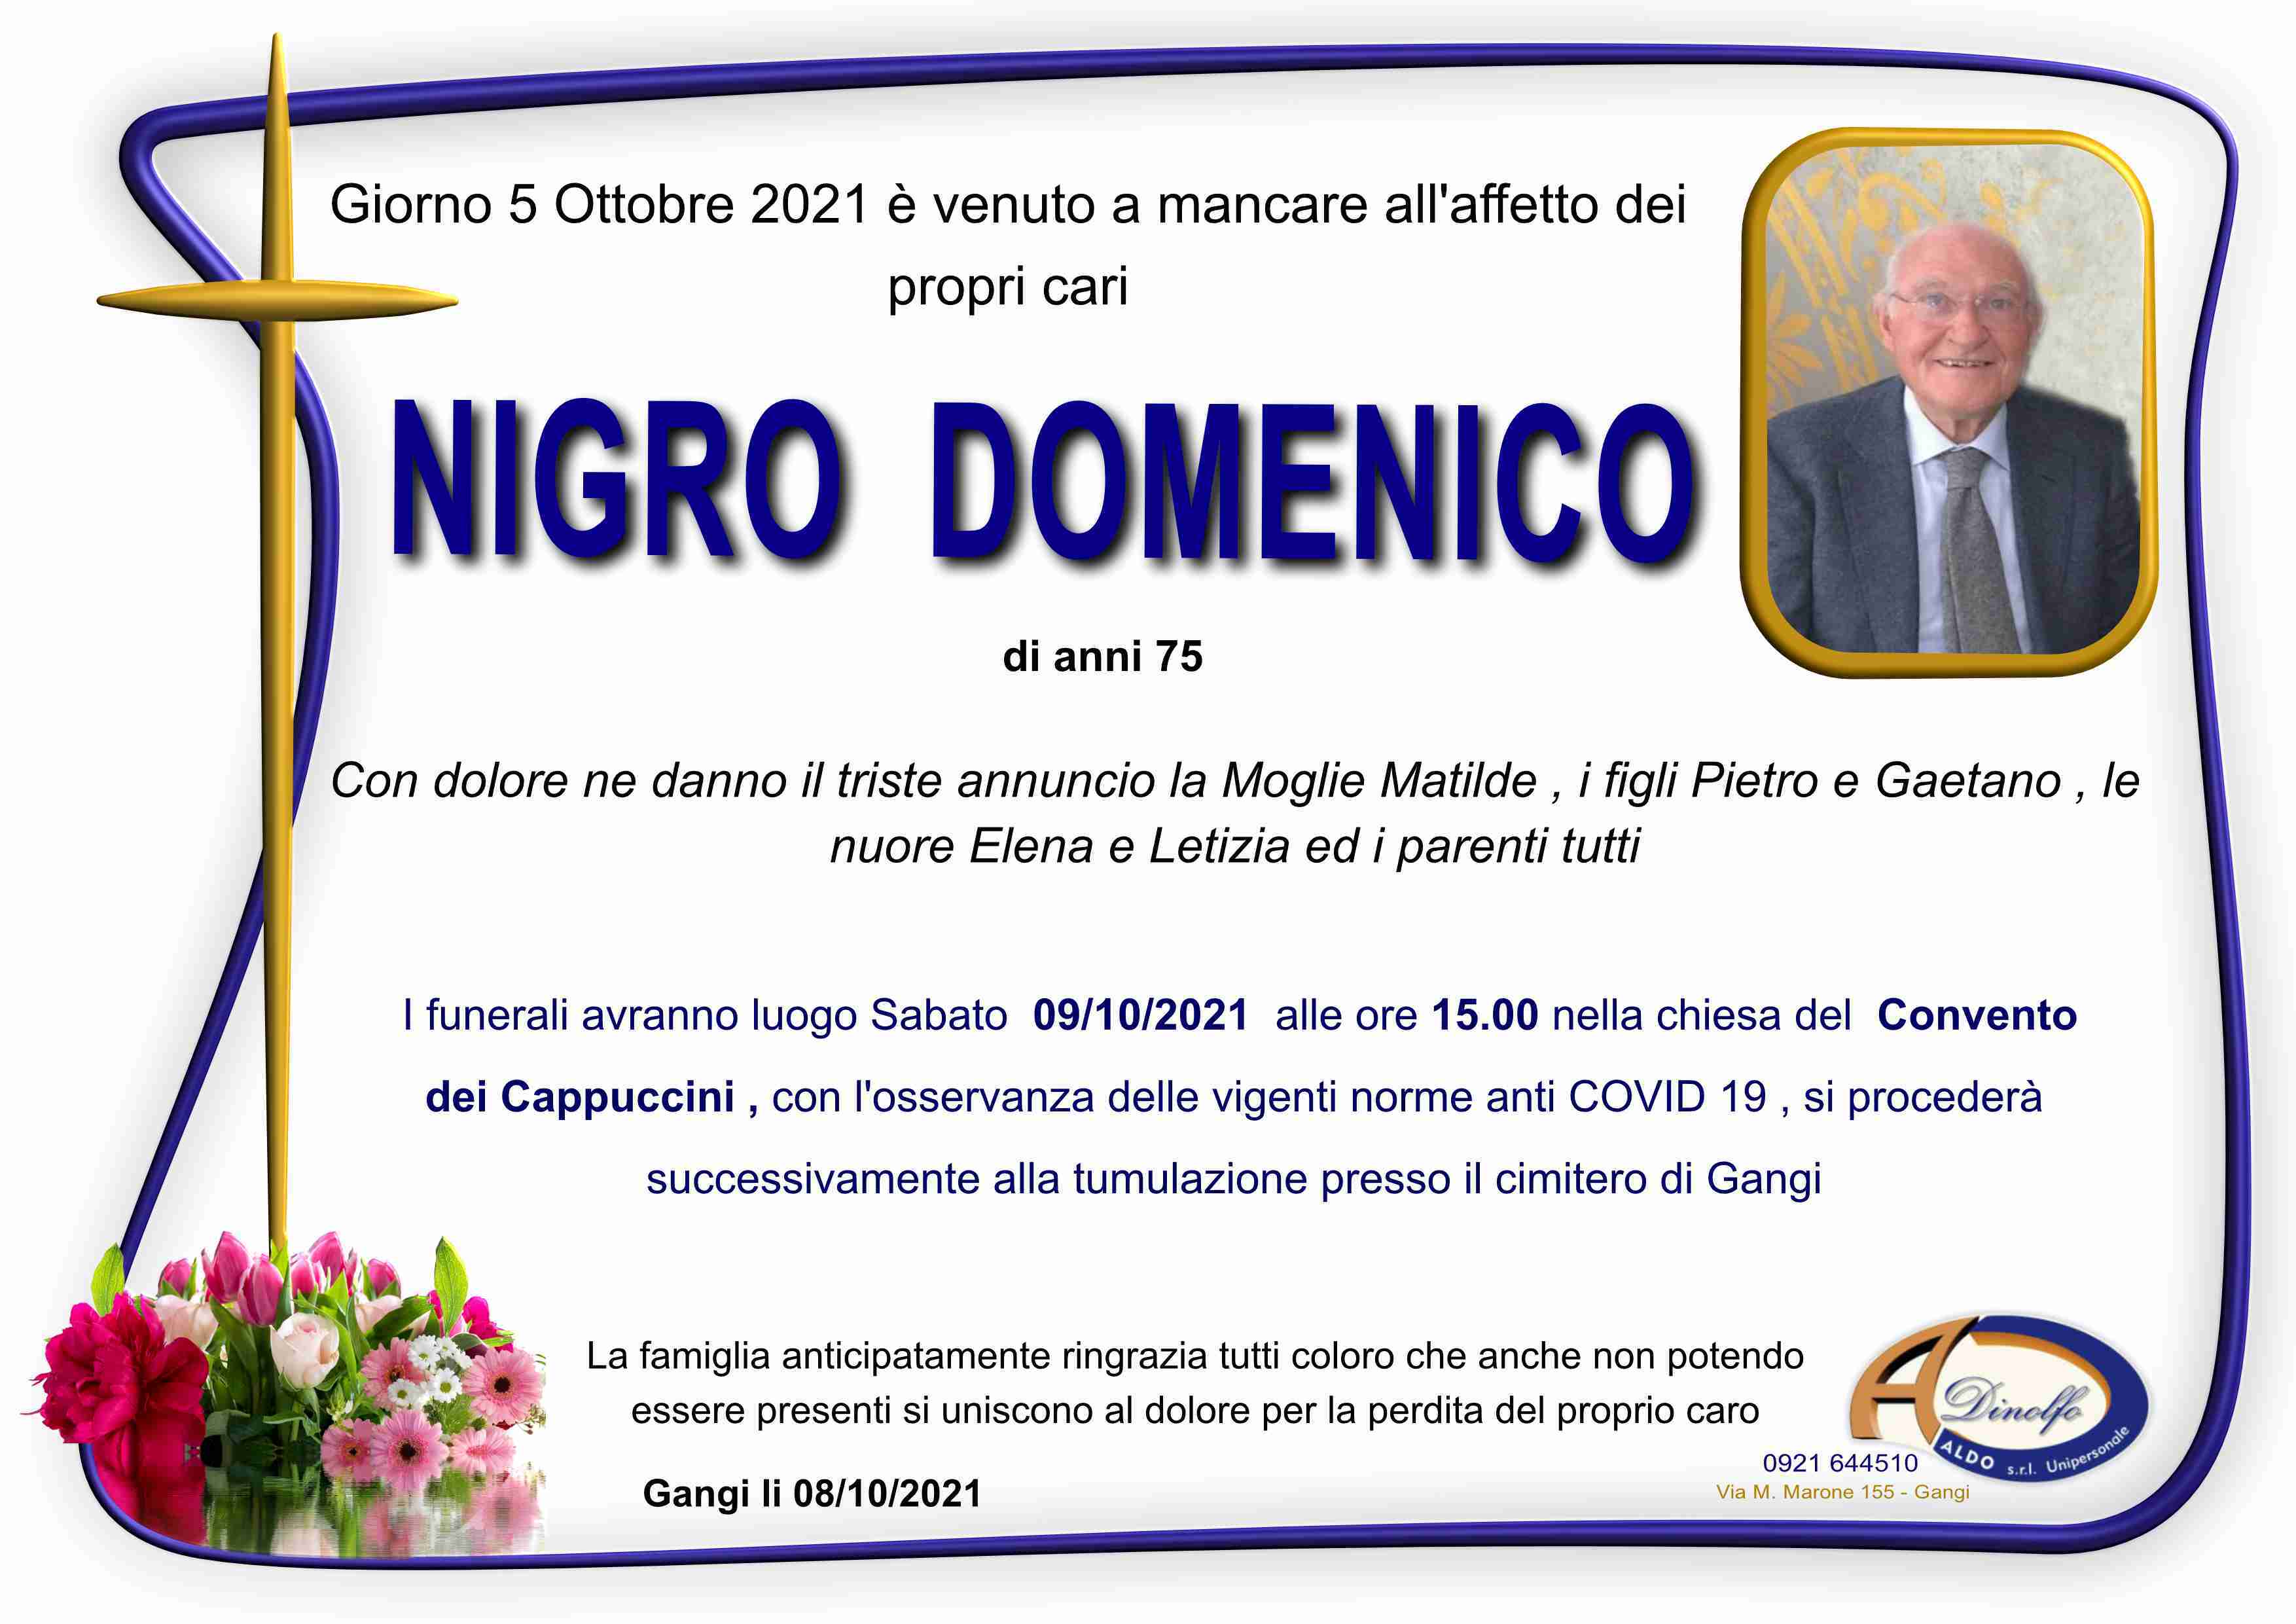 Domenico Nigro